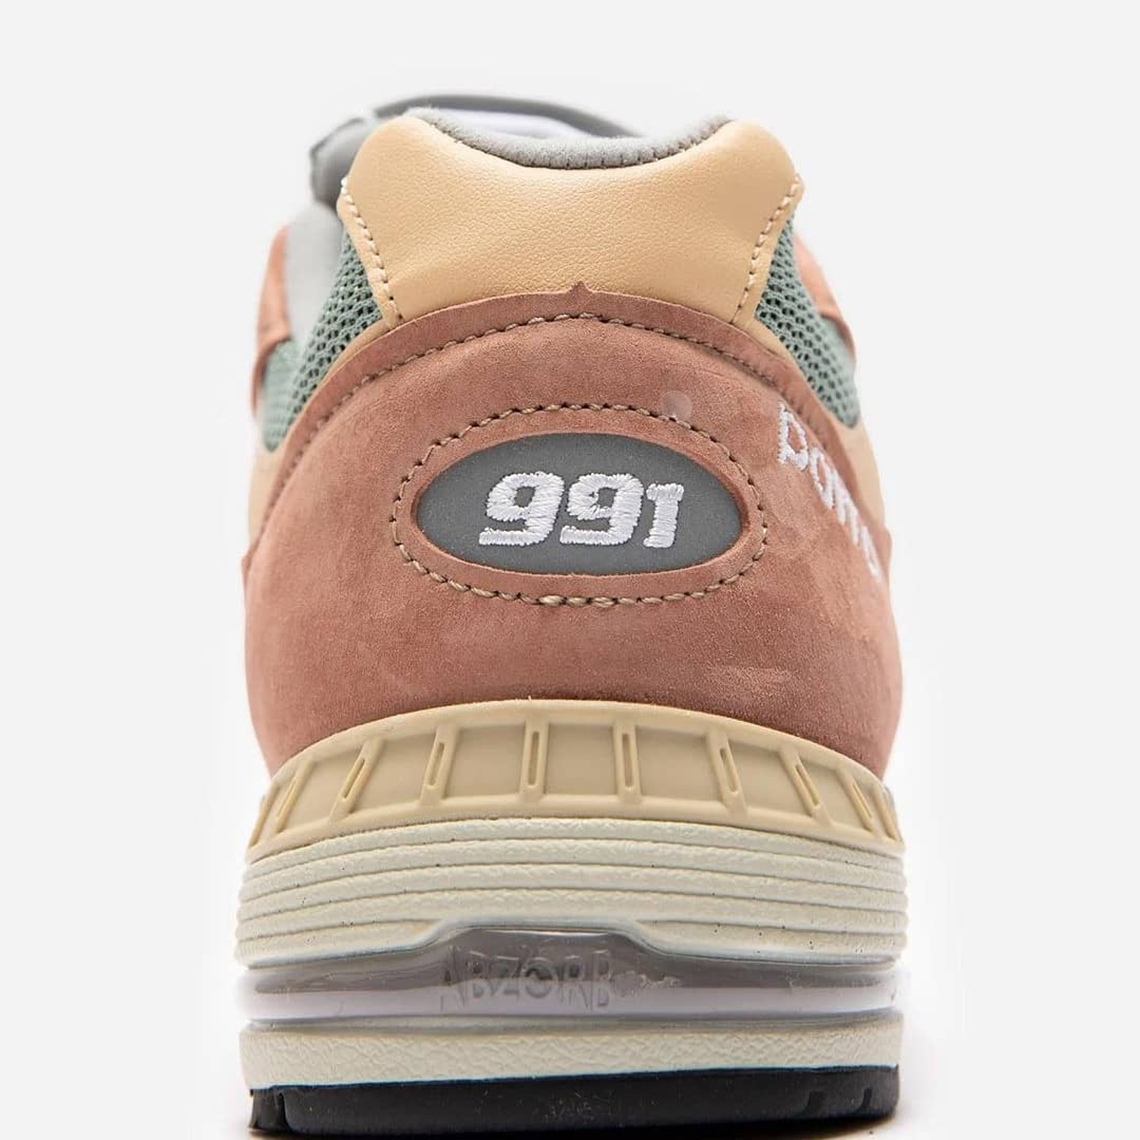 Patta New Balance 991 2021 Release Date | SneakerNews.com